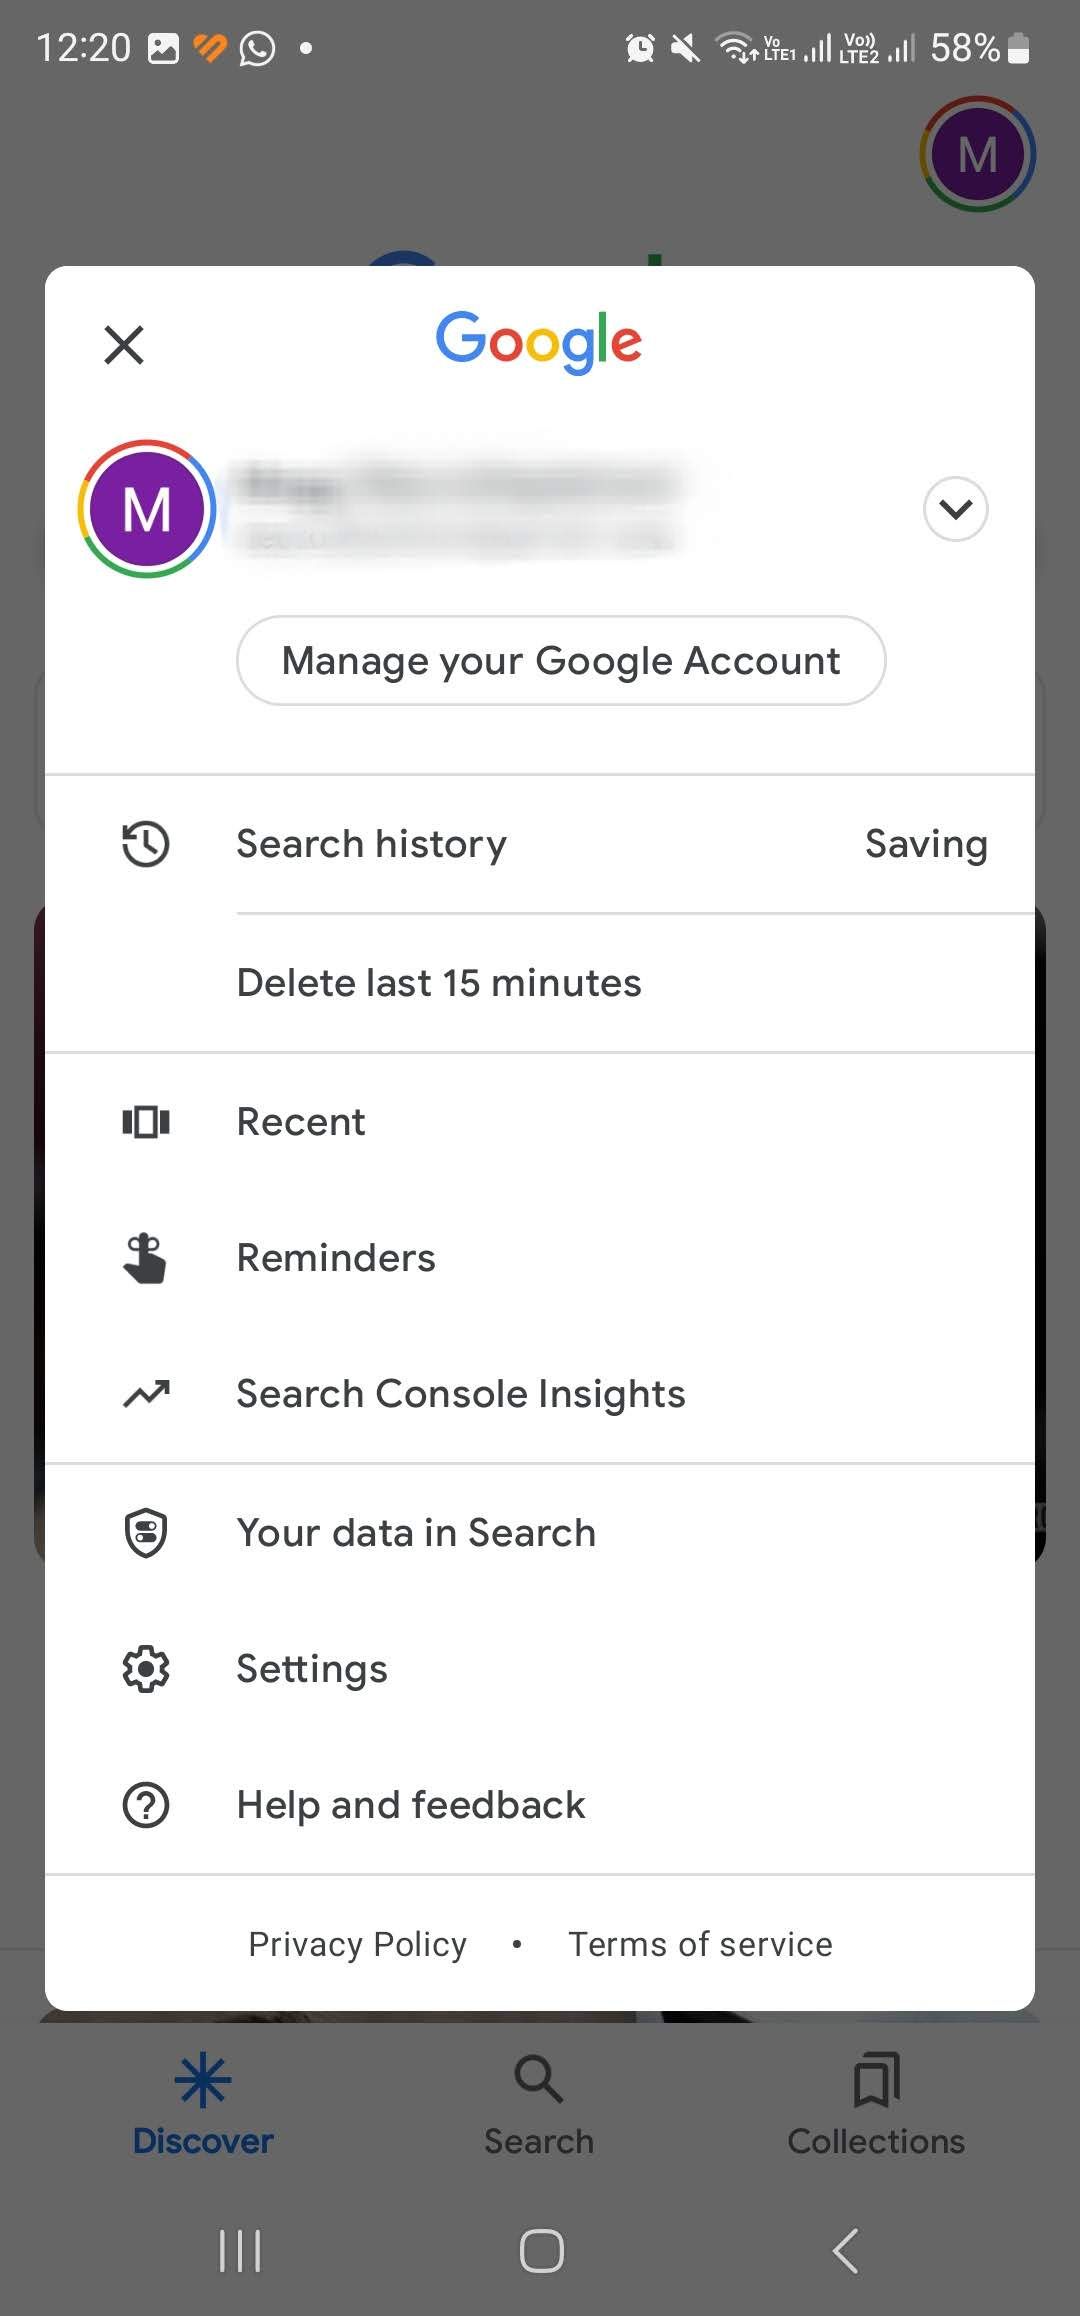 google app menu with google assistant